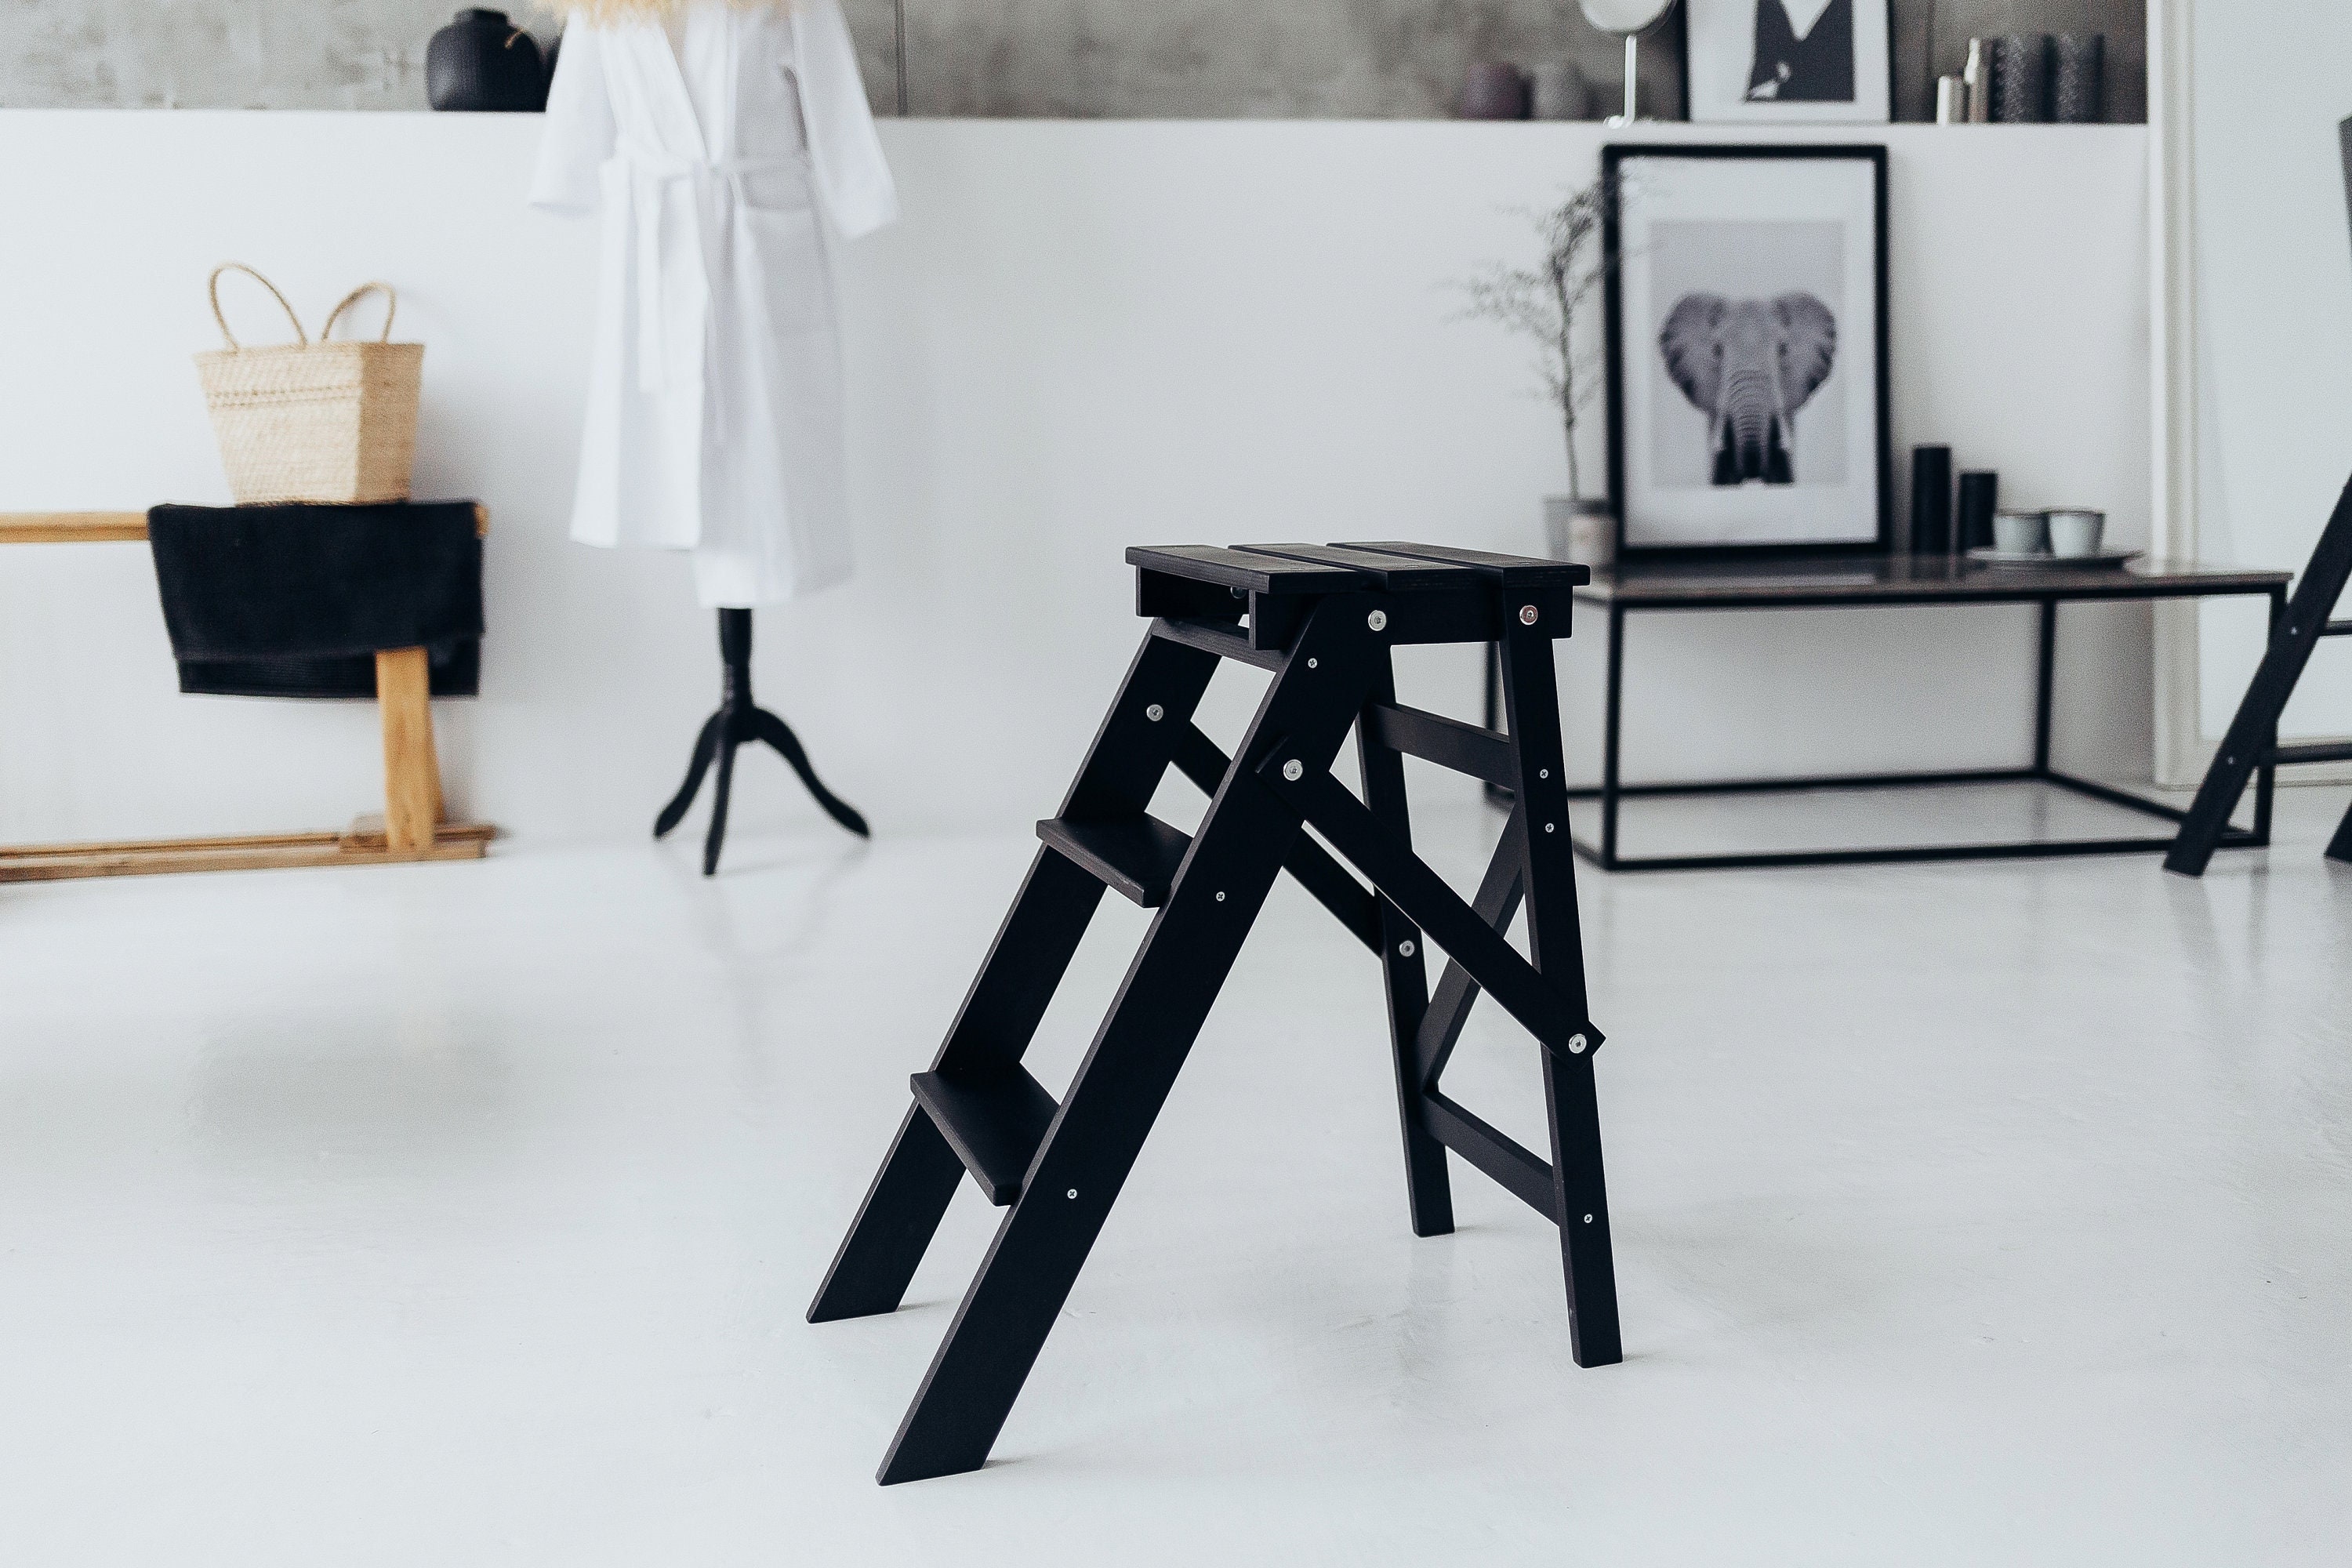 Ladder stool step for sale  